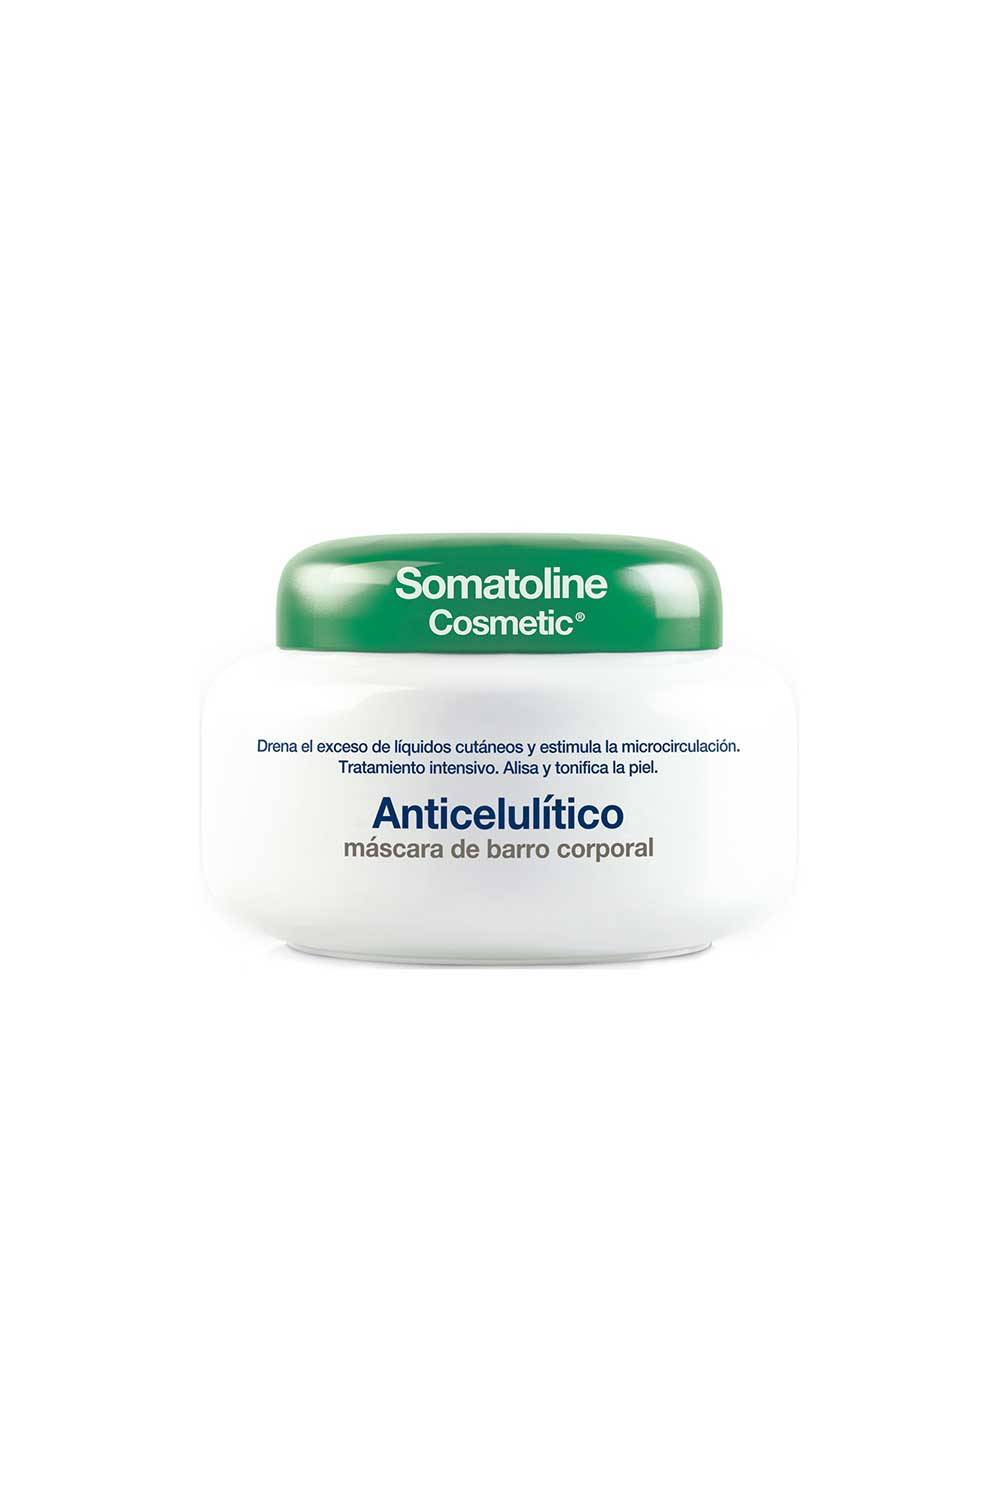 SomatolineP. Máscara de Barro Anticelulítico de Somatoline Cosmetic